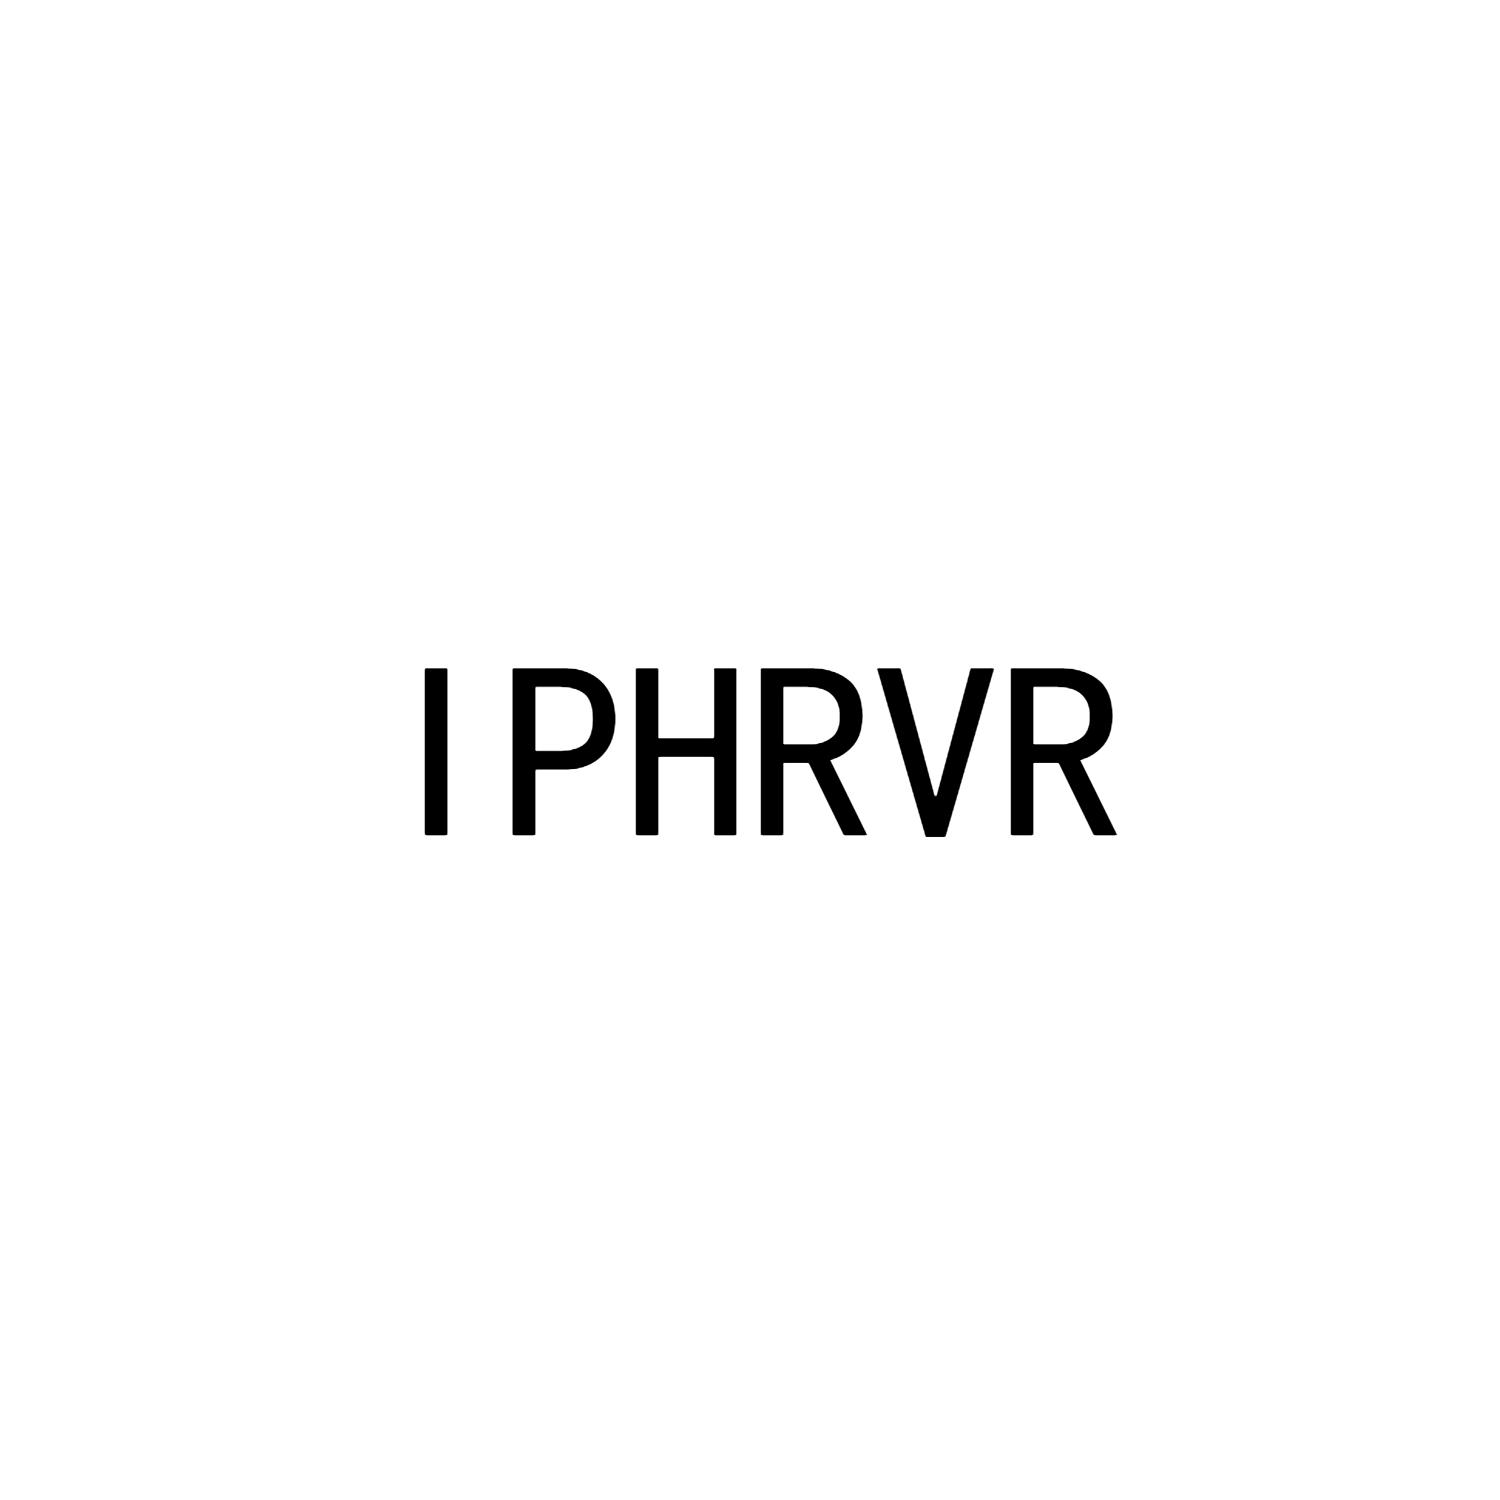 IPHRVR